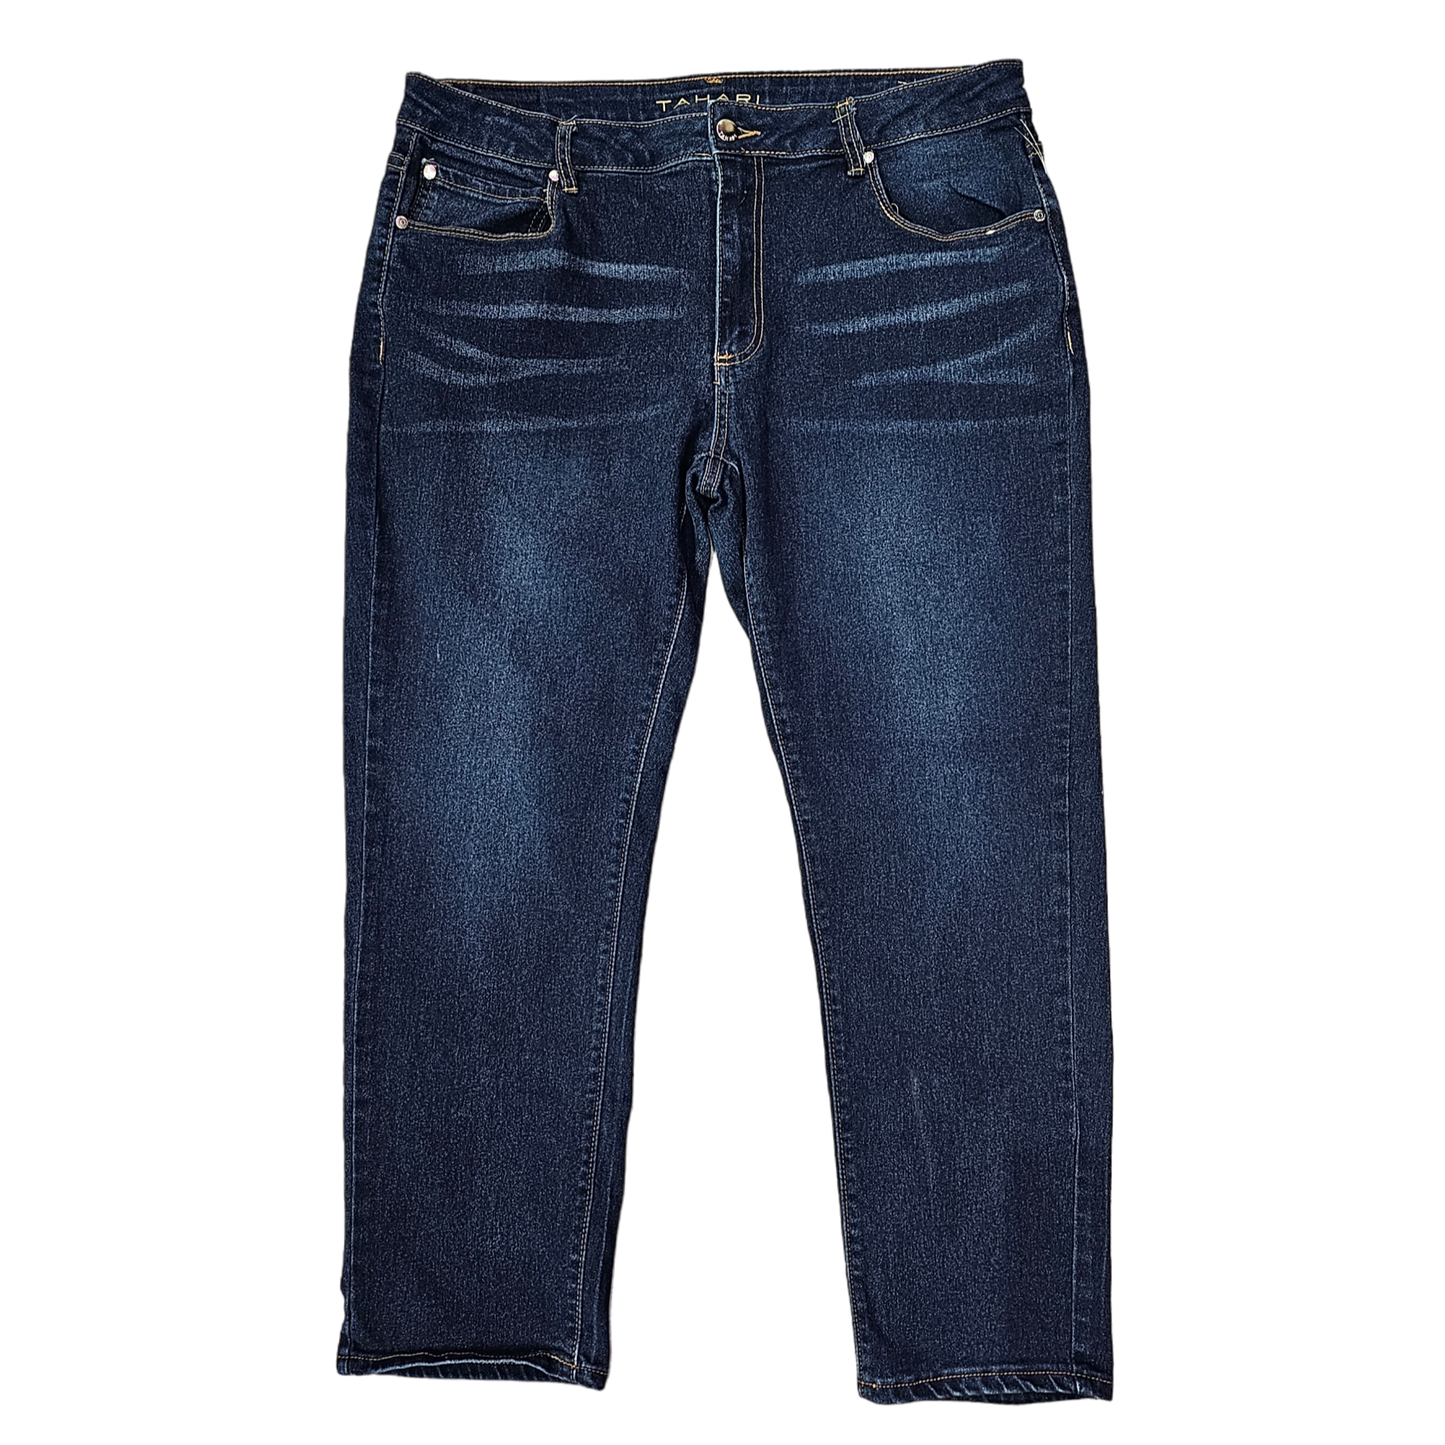 Jeans Designer By Tahari  Size: 16